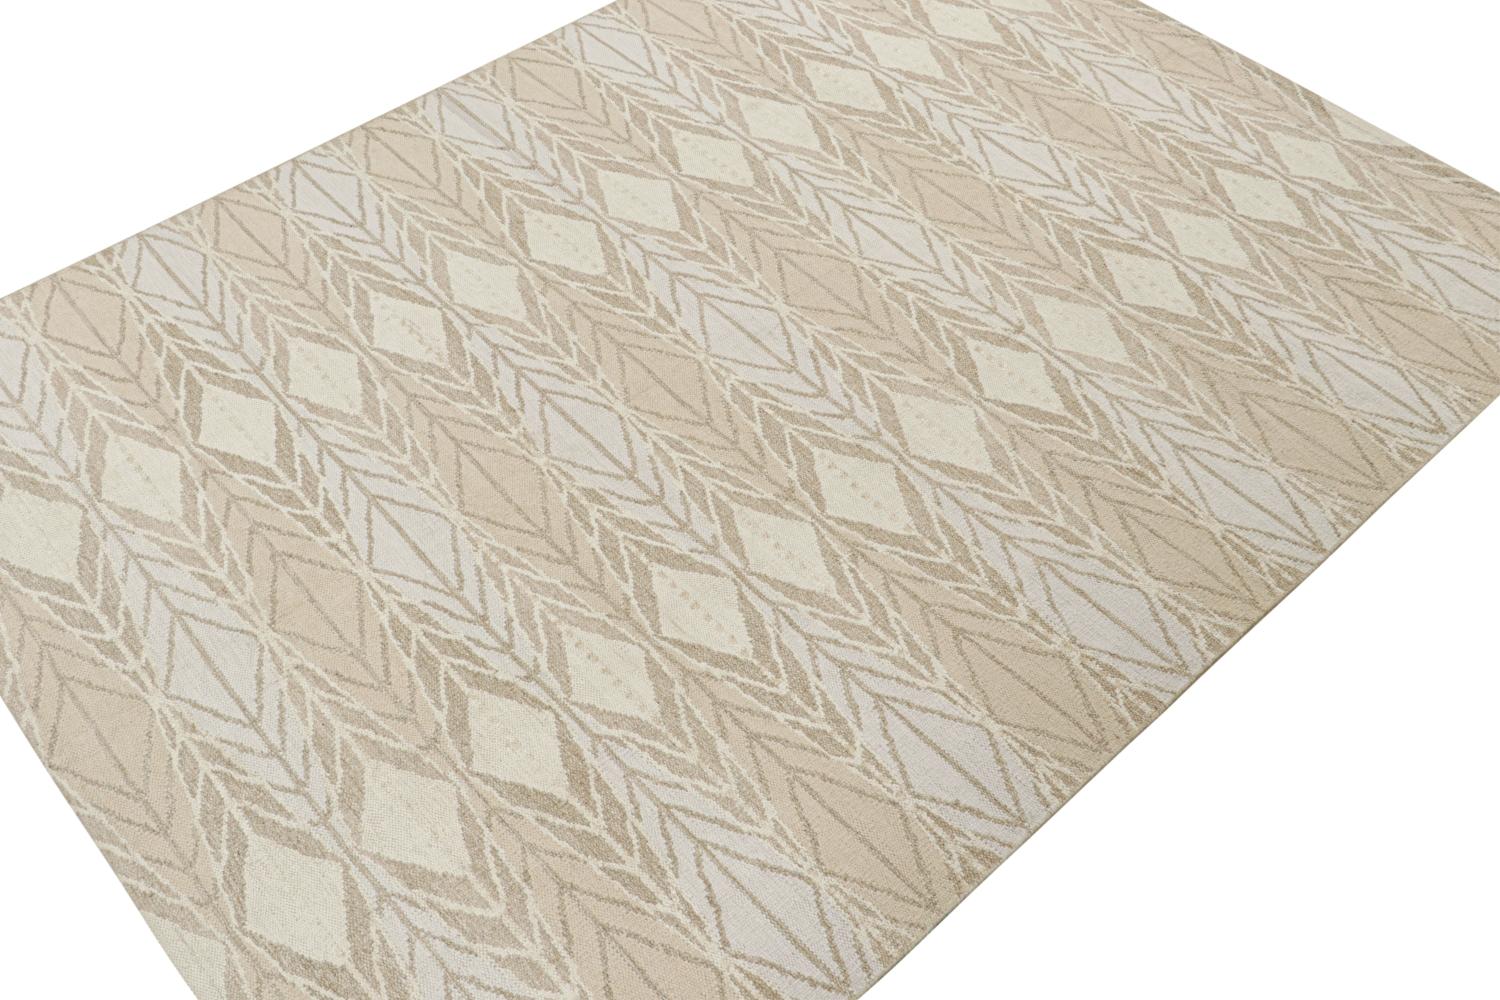 Indian Rug & Kilim’s Scandinavian Style Kilim in Beige-Brown & White Geometric Pattern For Sale